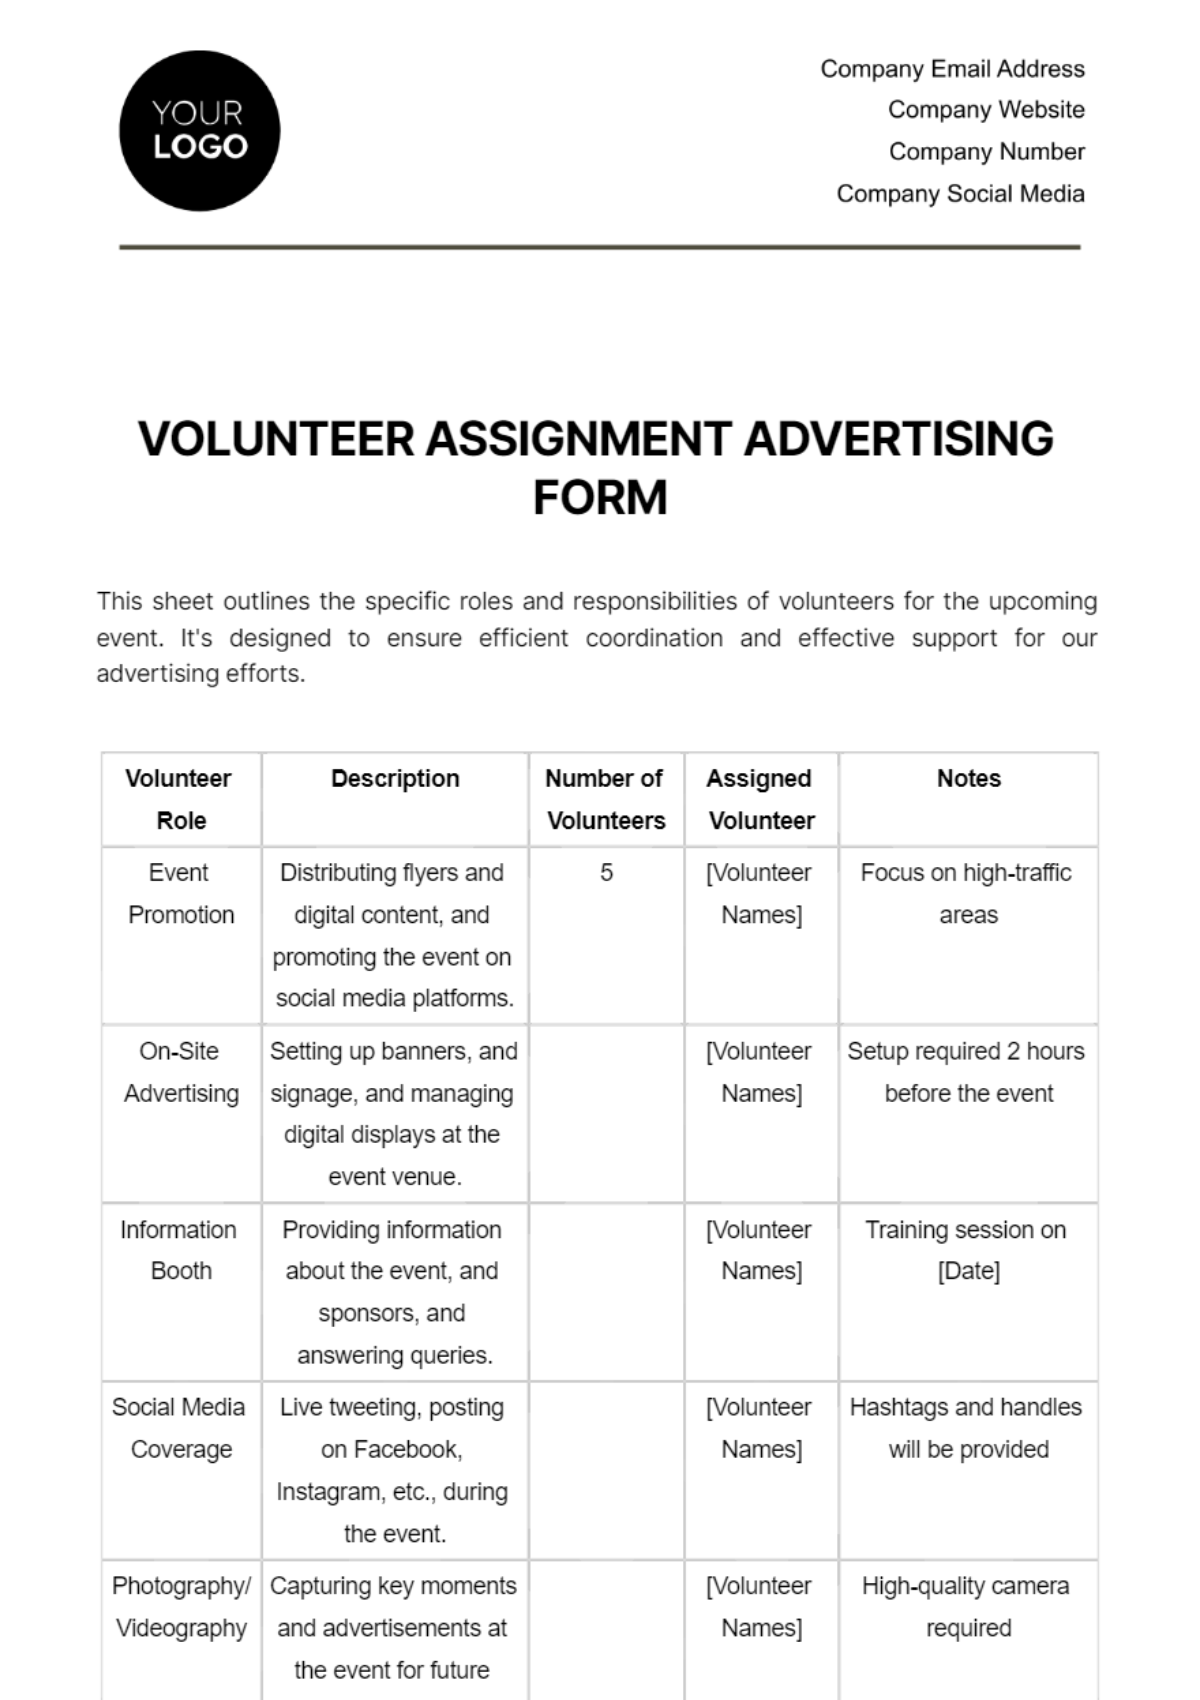 Volunteer Assignment Advertising Form Template